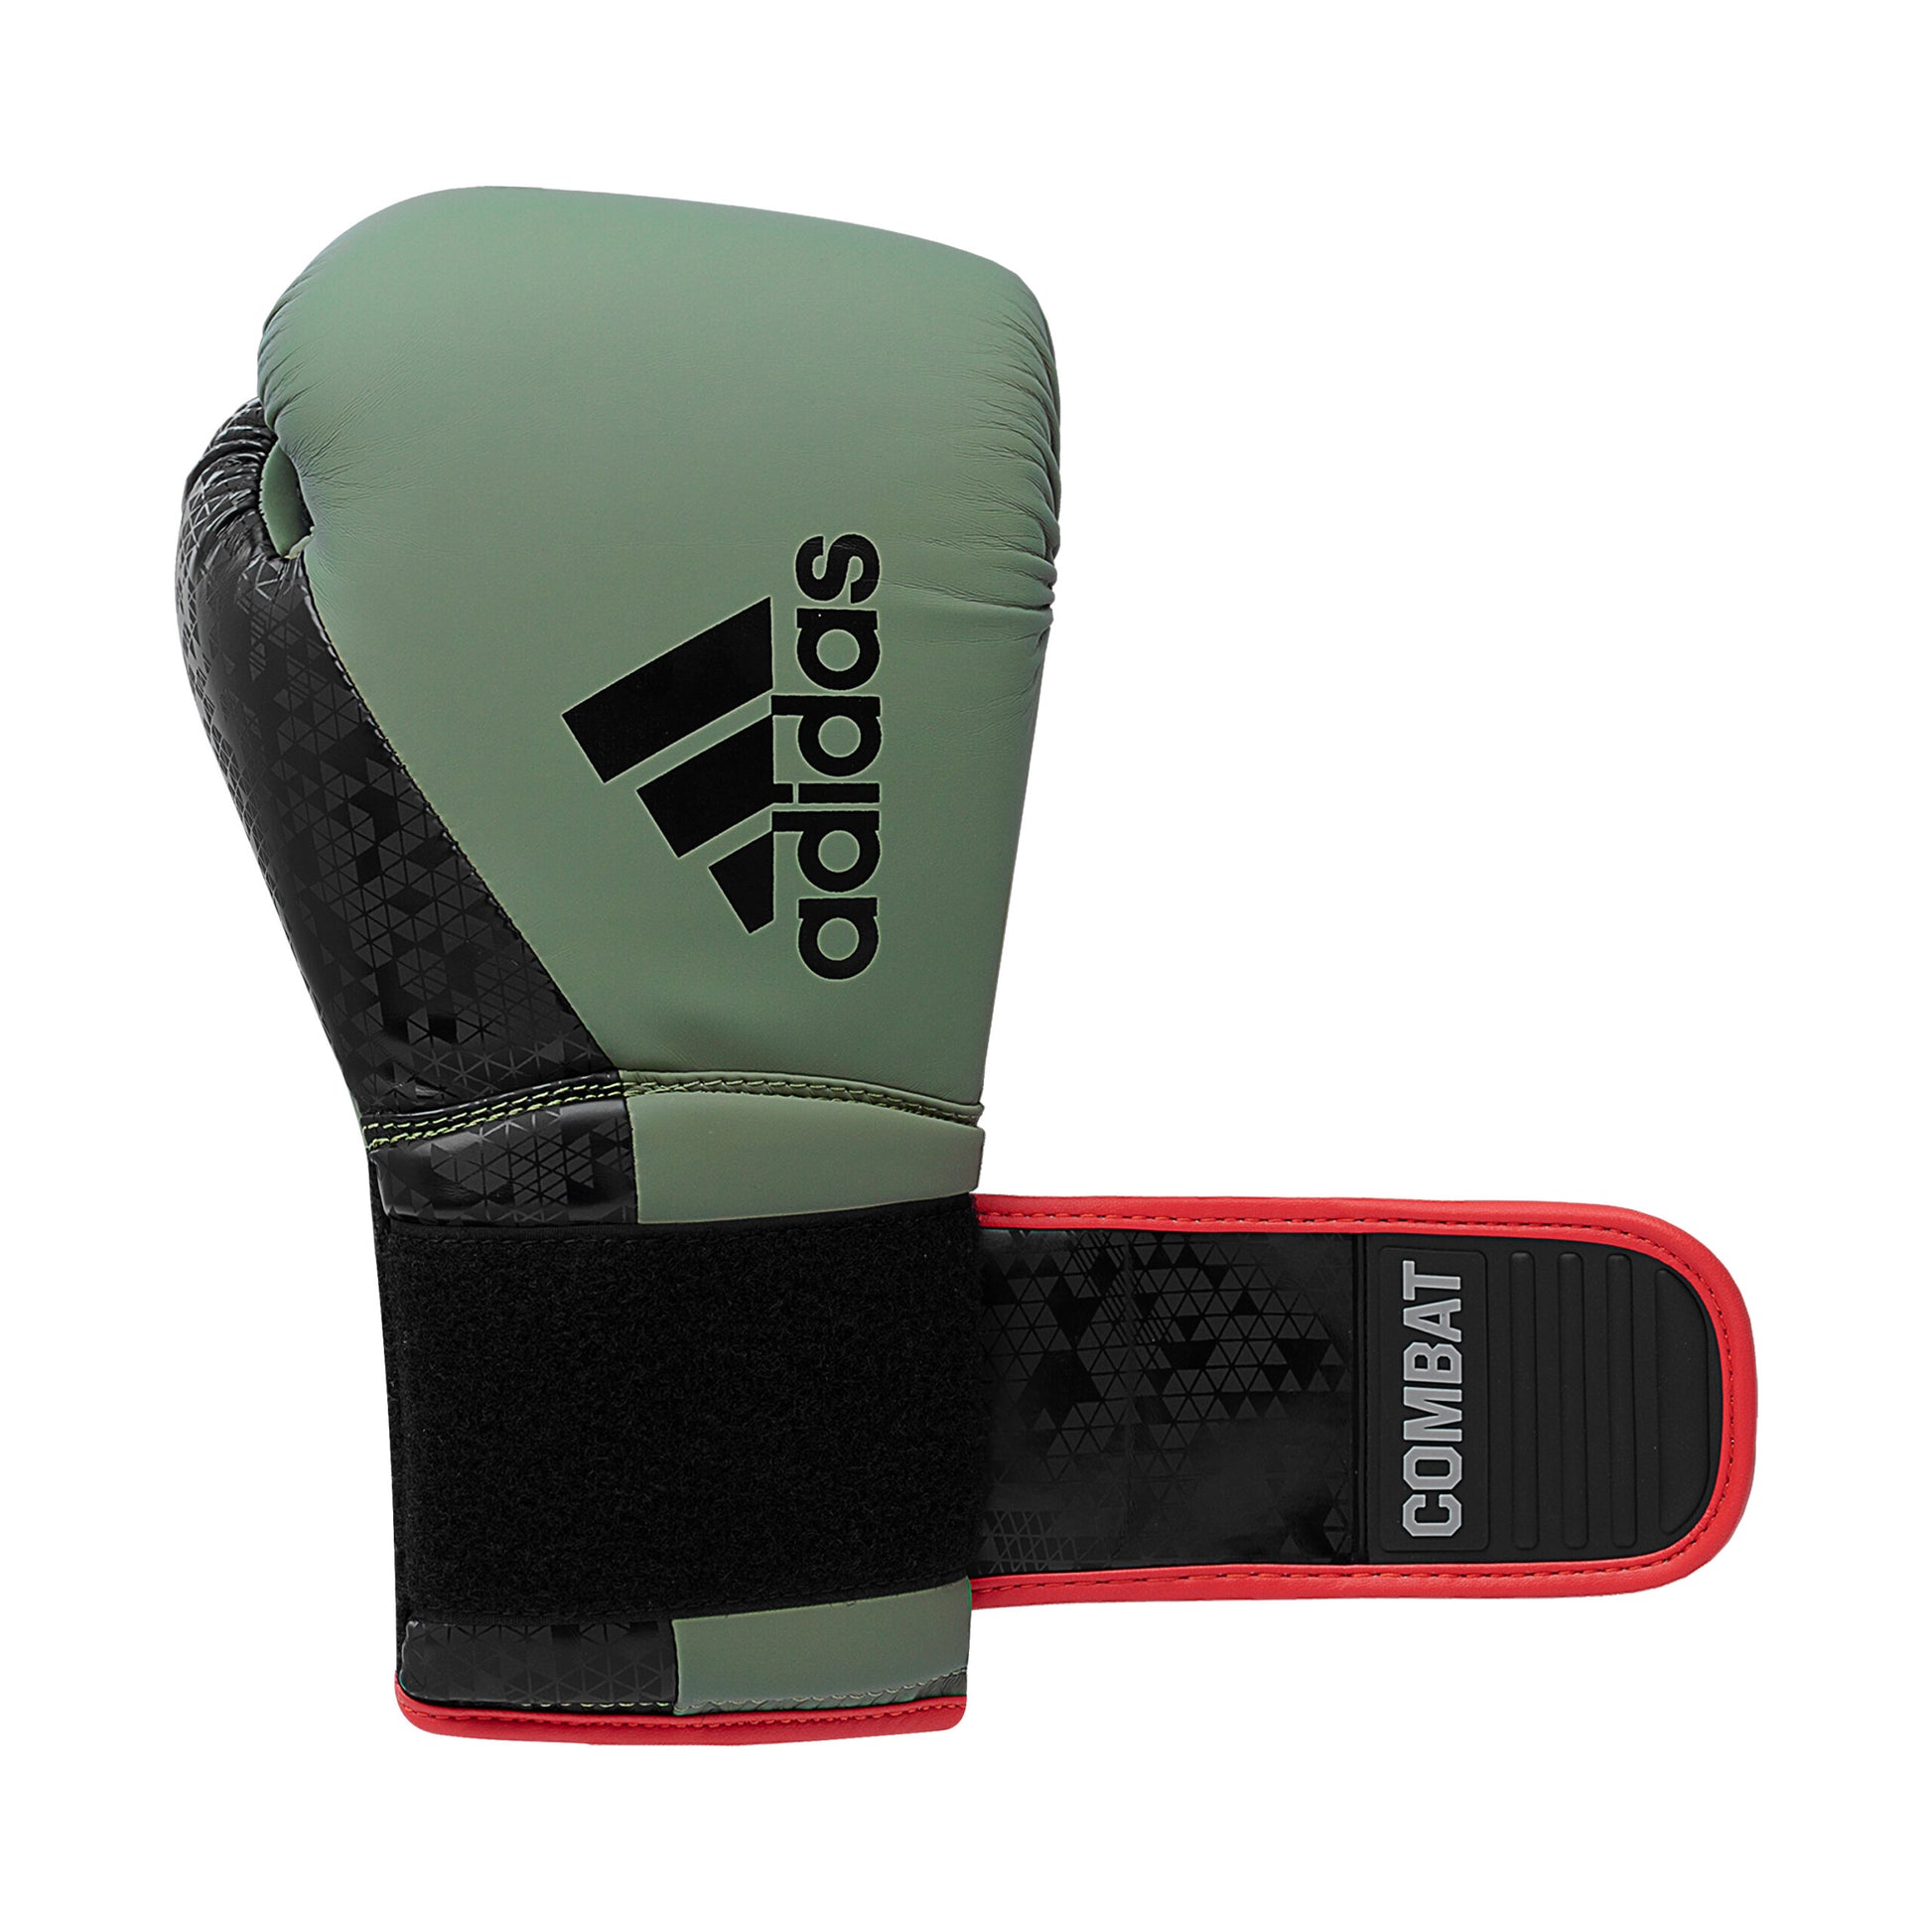 Adic50tg Combat 50 Training Boxing Gloves Orbit Green Black 05